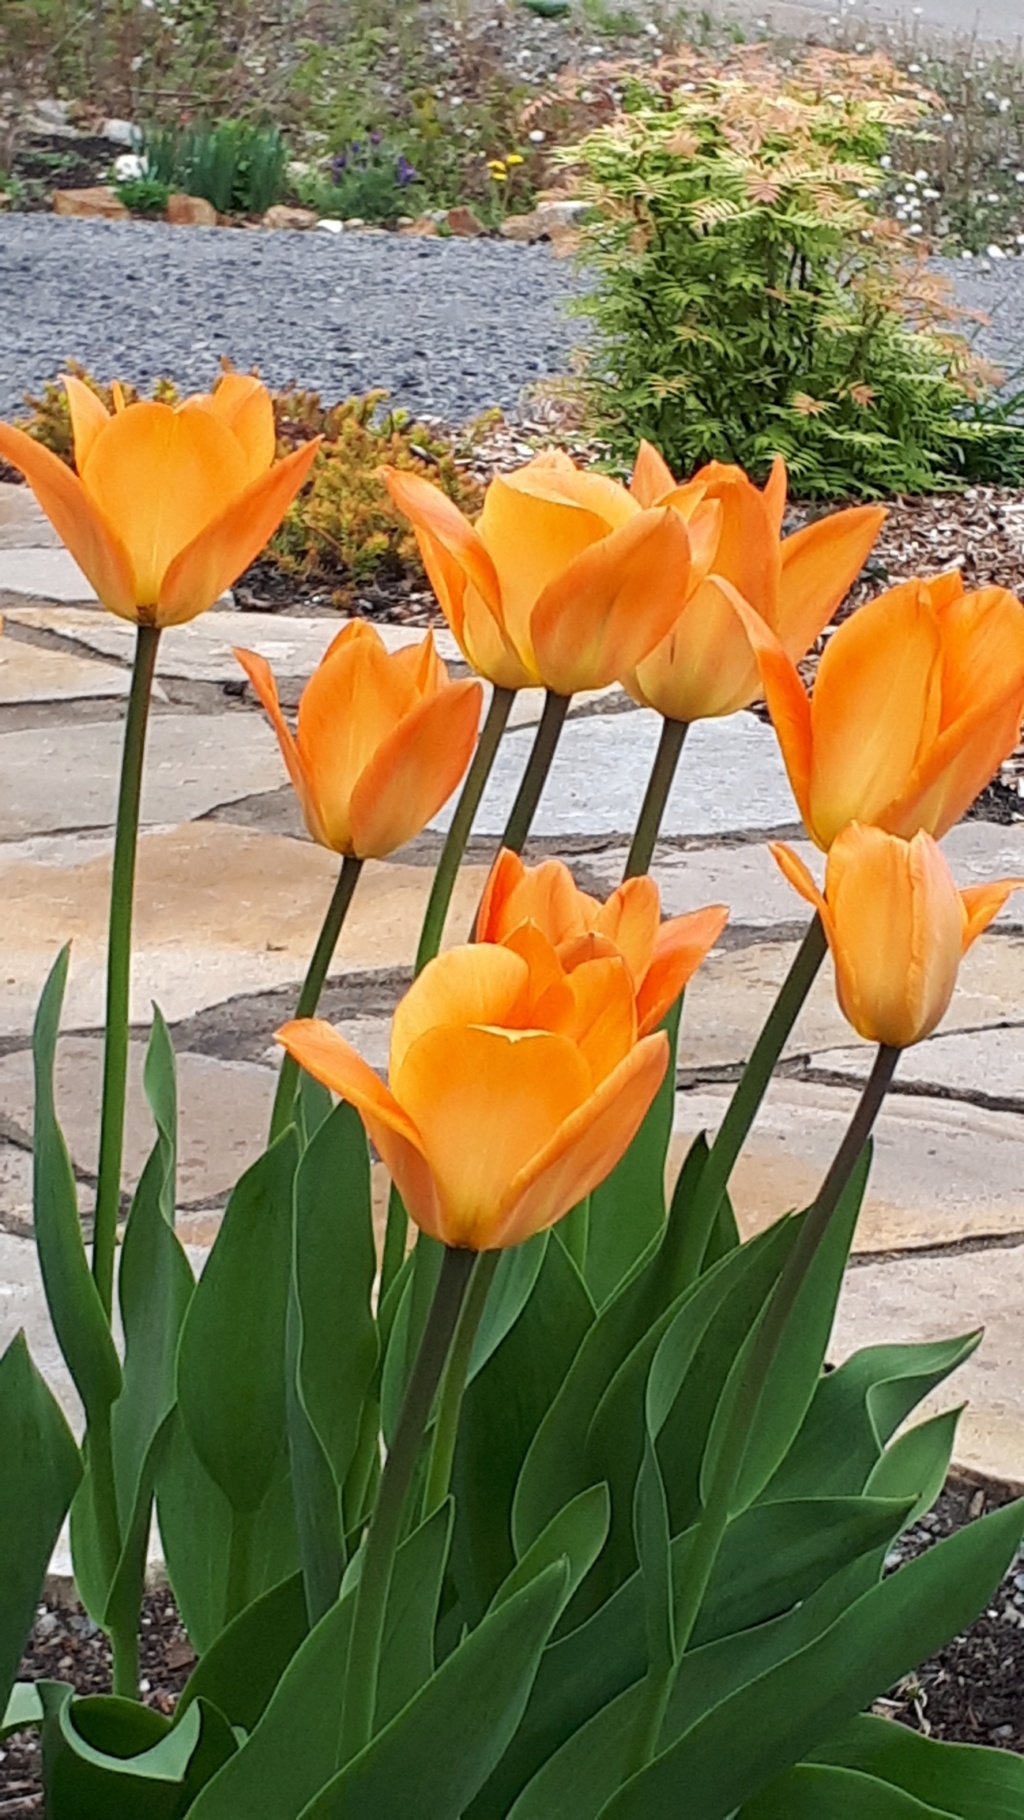 Tulipe, tulipes Tulipa fosteriana Orange Emperor